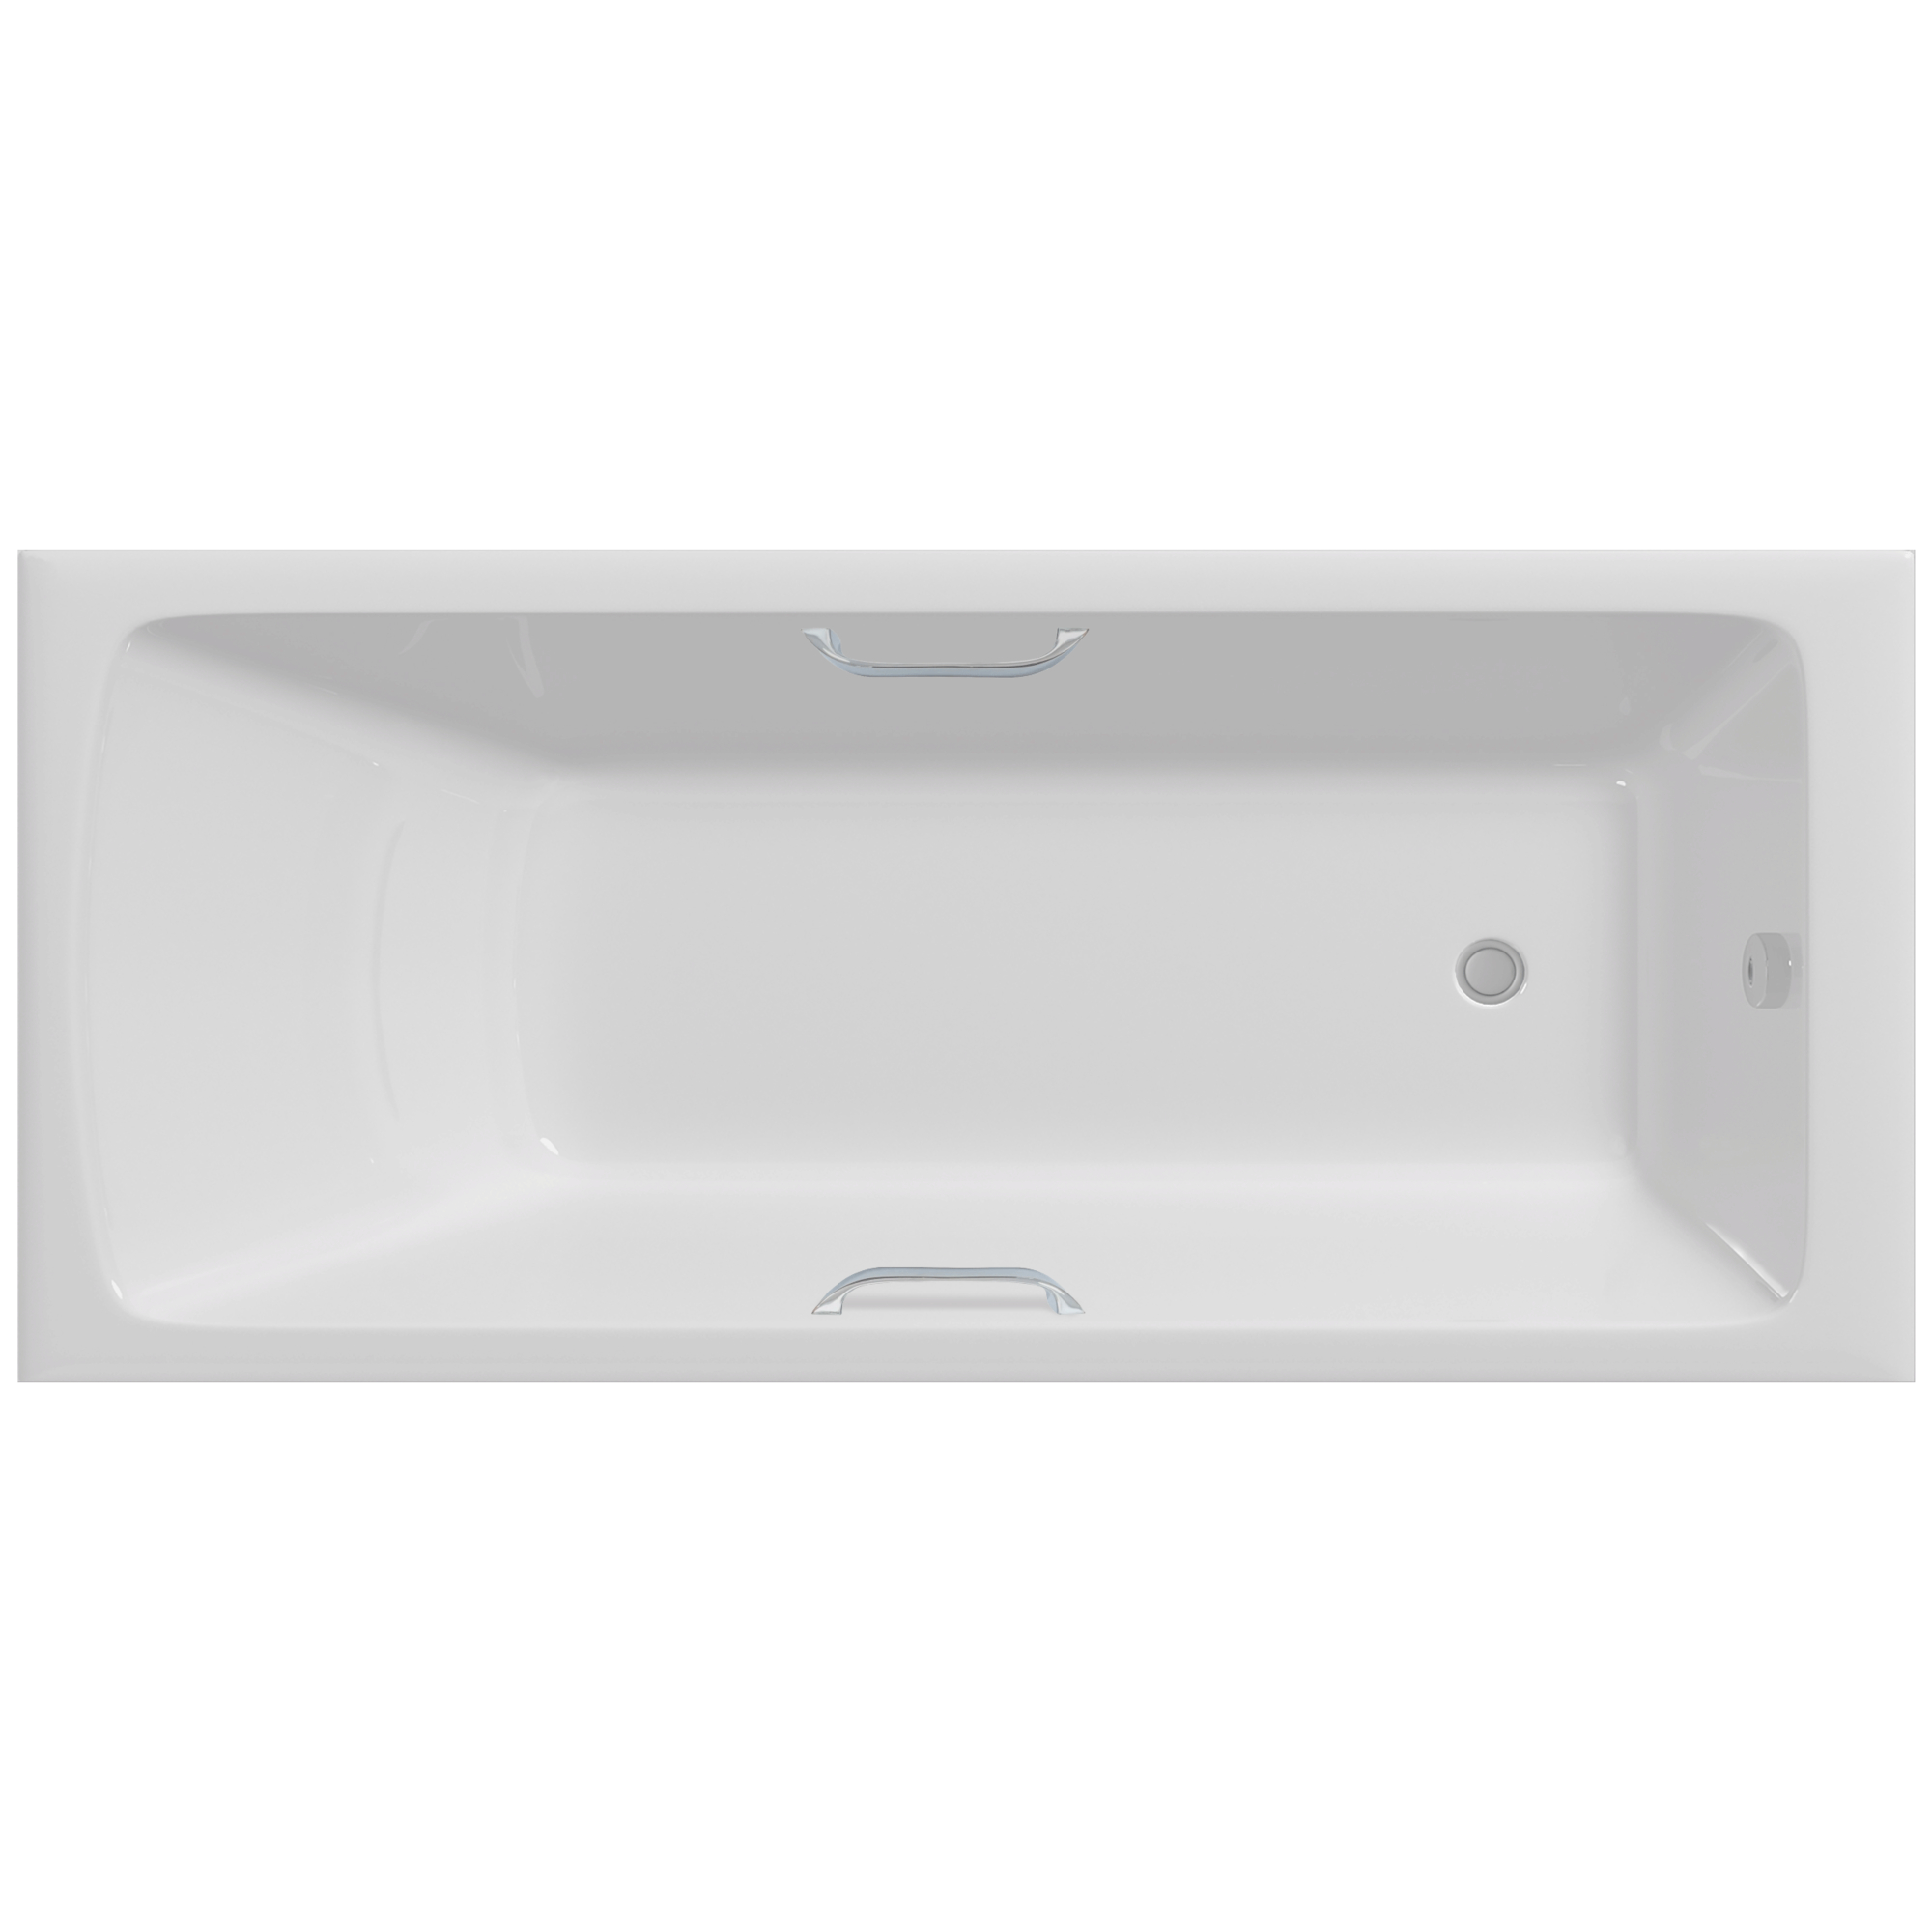 Чугунная ванна Delice Camelot 180х80 DLR230616R ванна из литьевого мрамора и стиль риспекта 180х80